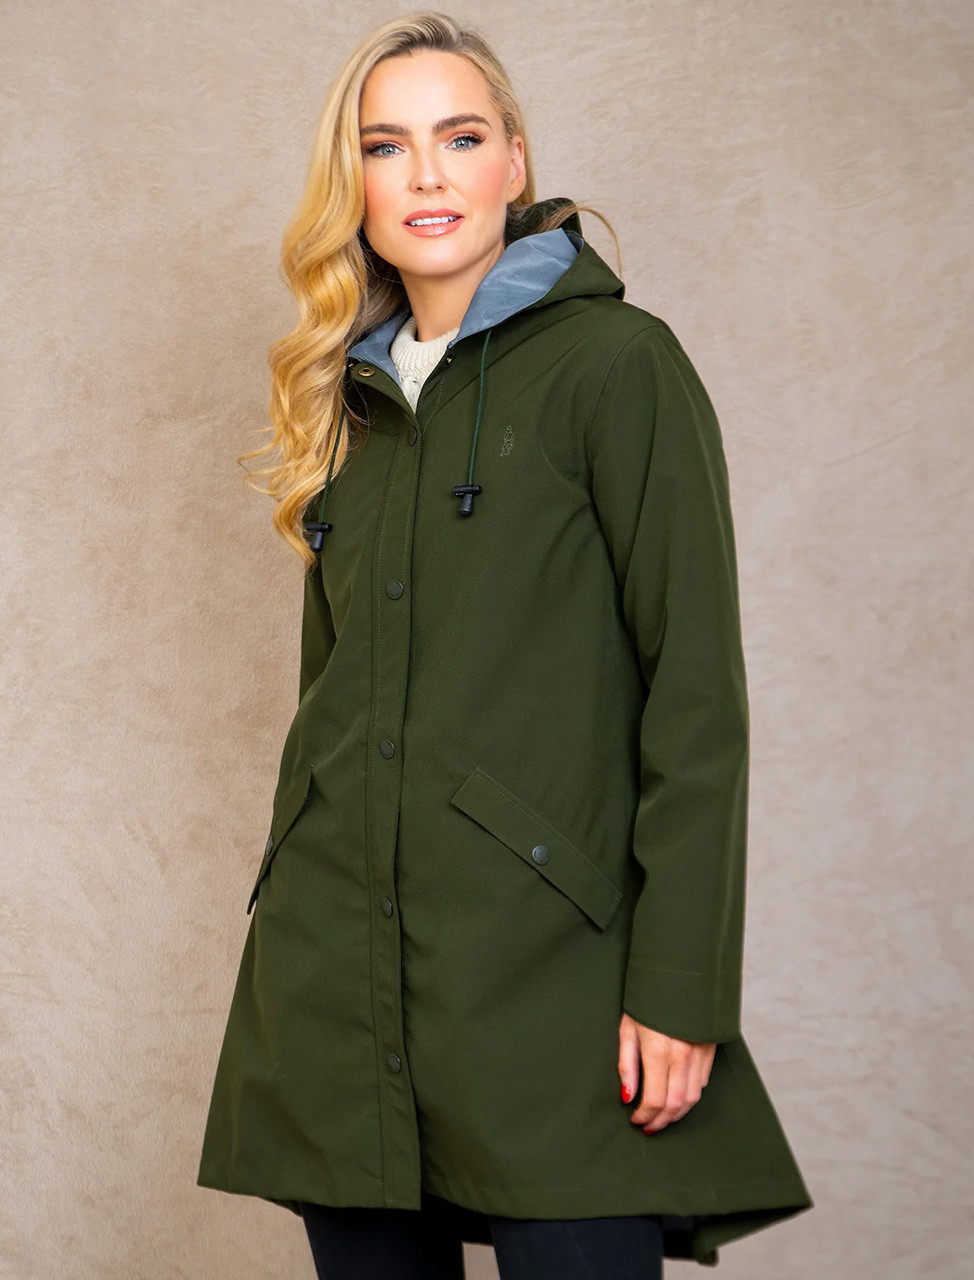 Ladies Trespass Florissant 5000mm Waterproof Jacket with Taped Seams | eBay